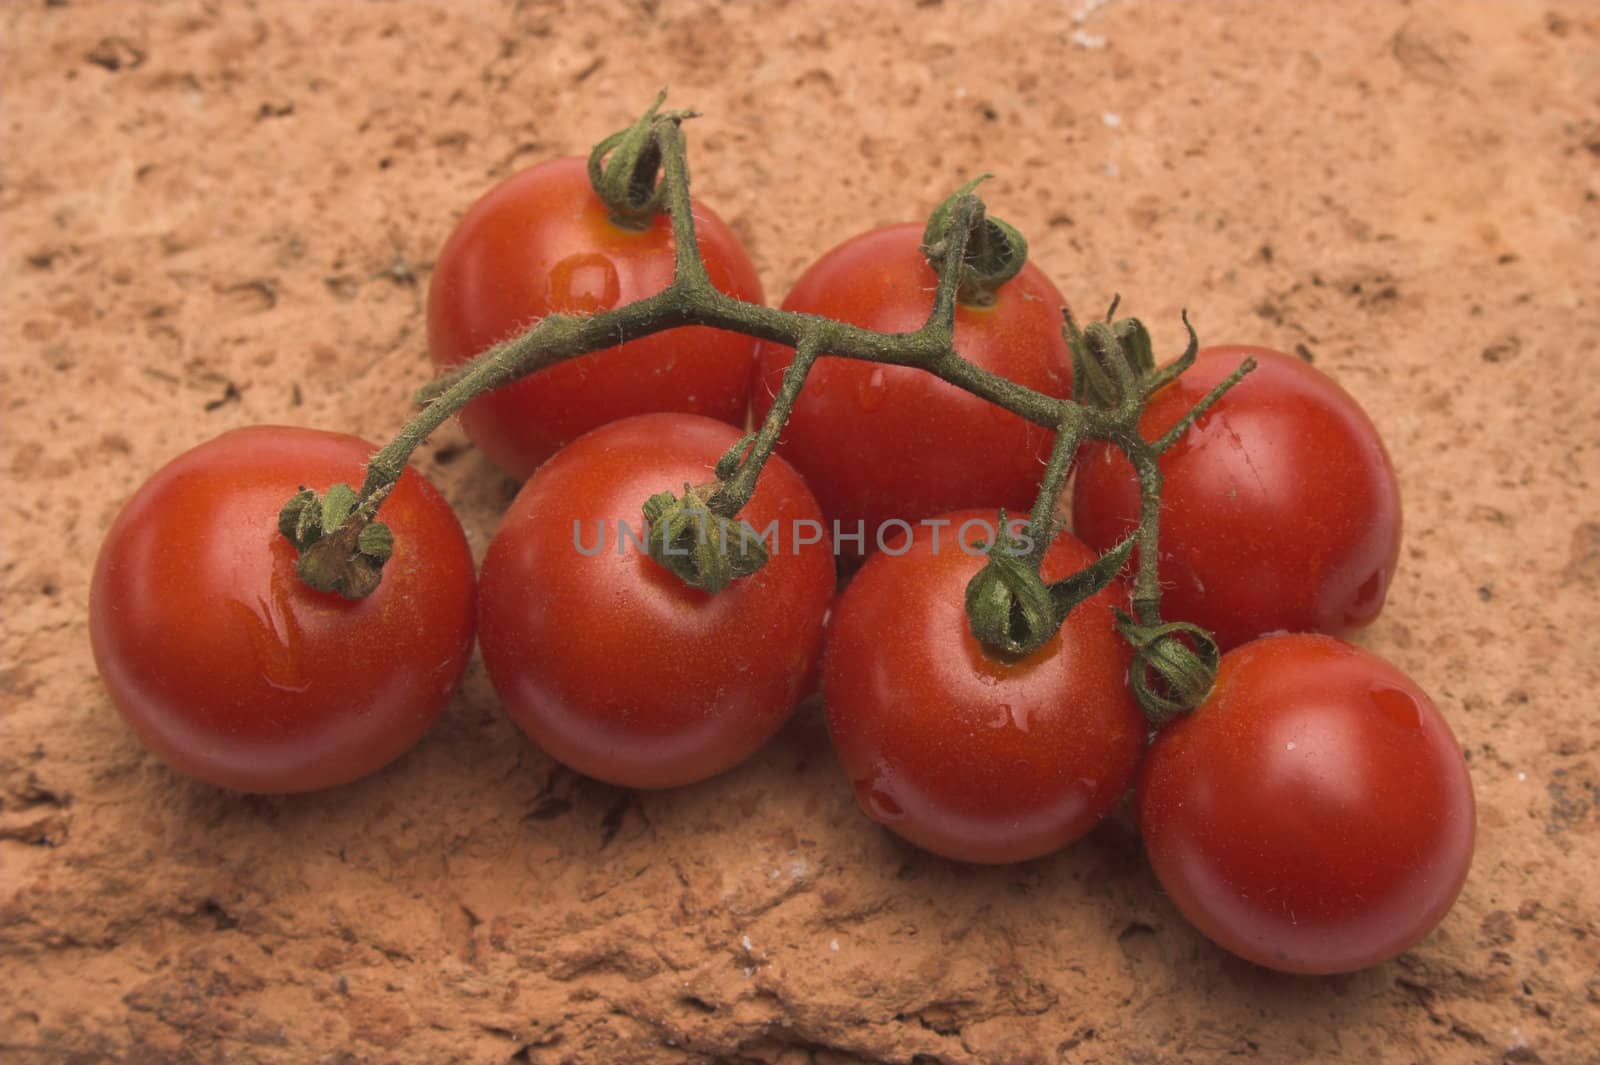 Tomatoes by alexkosev